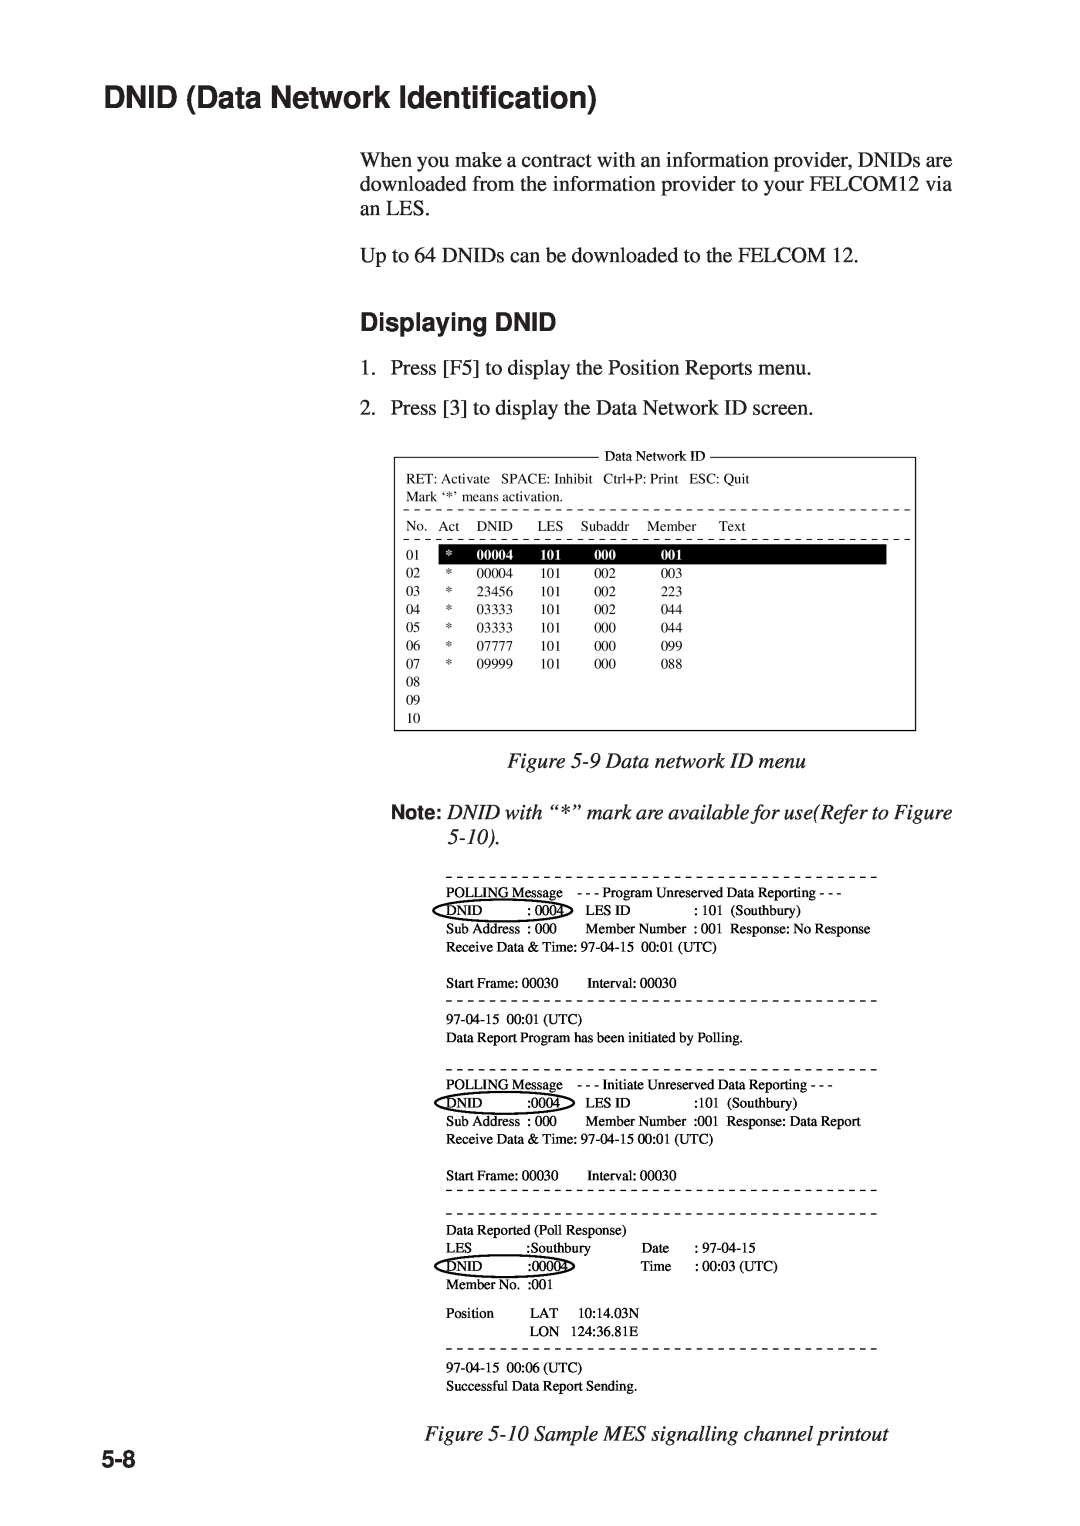 Furuno RC-1500-1T manual DNID Data Network Identification, Displaying DNID, 9 Data network ID menu, 00004 